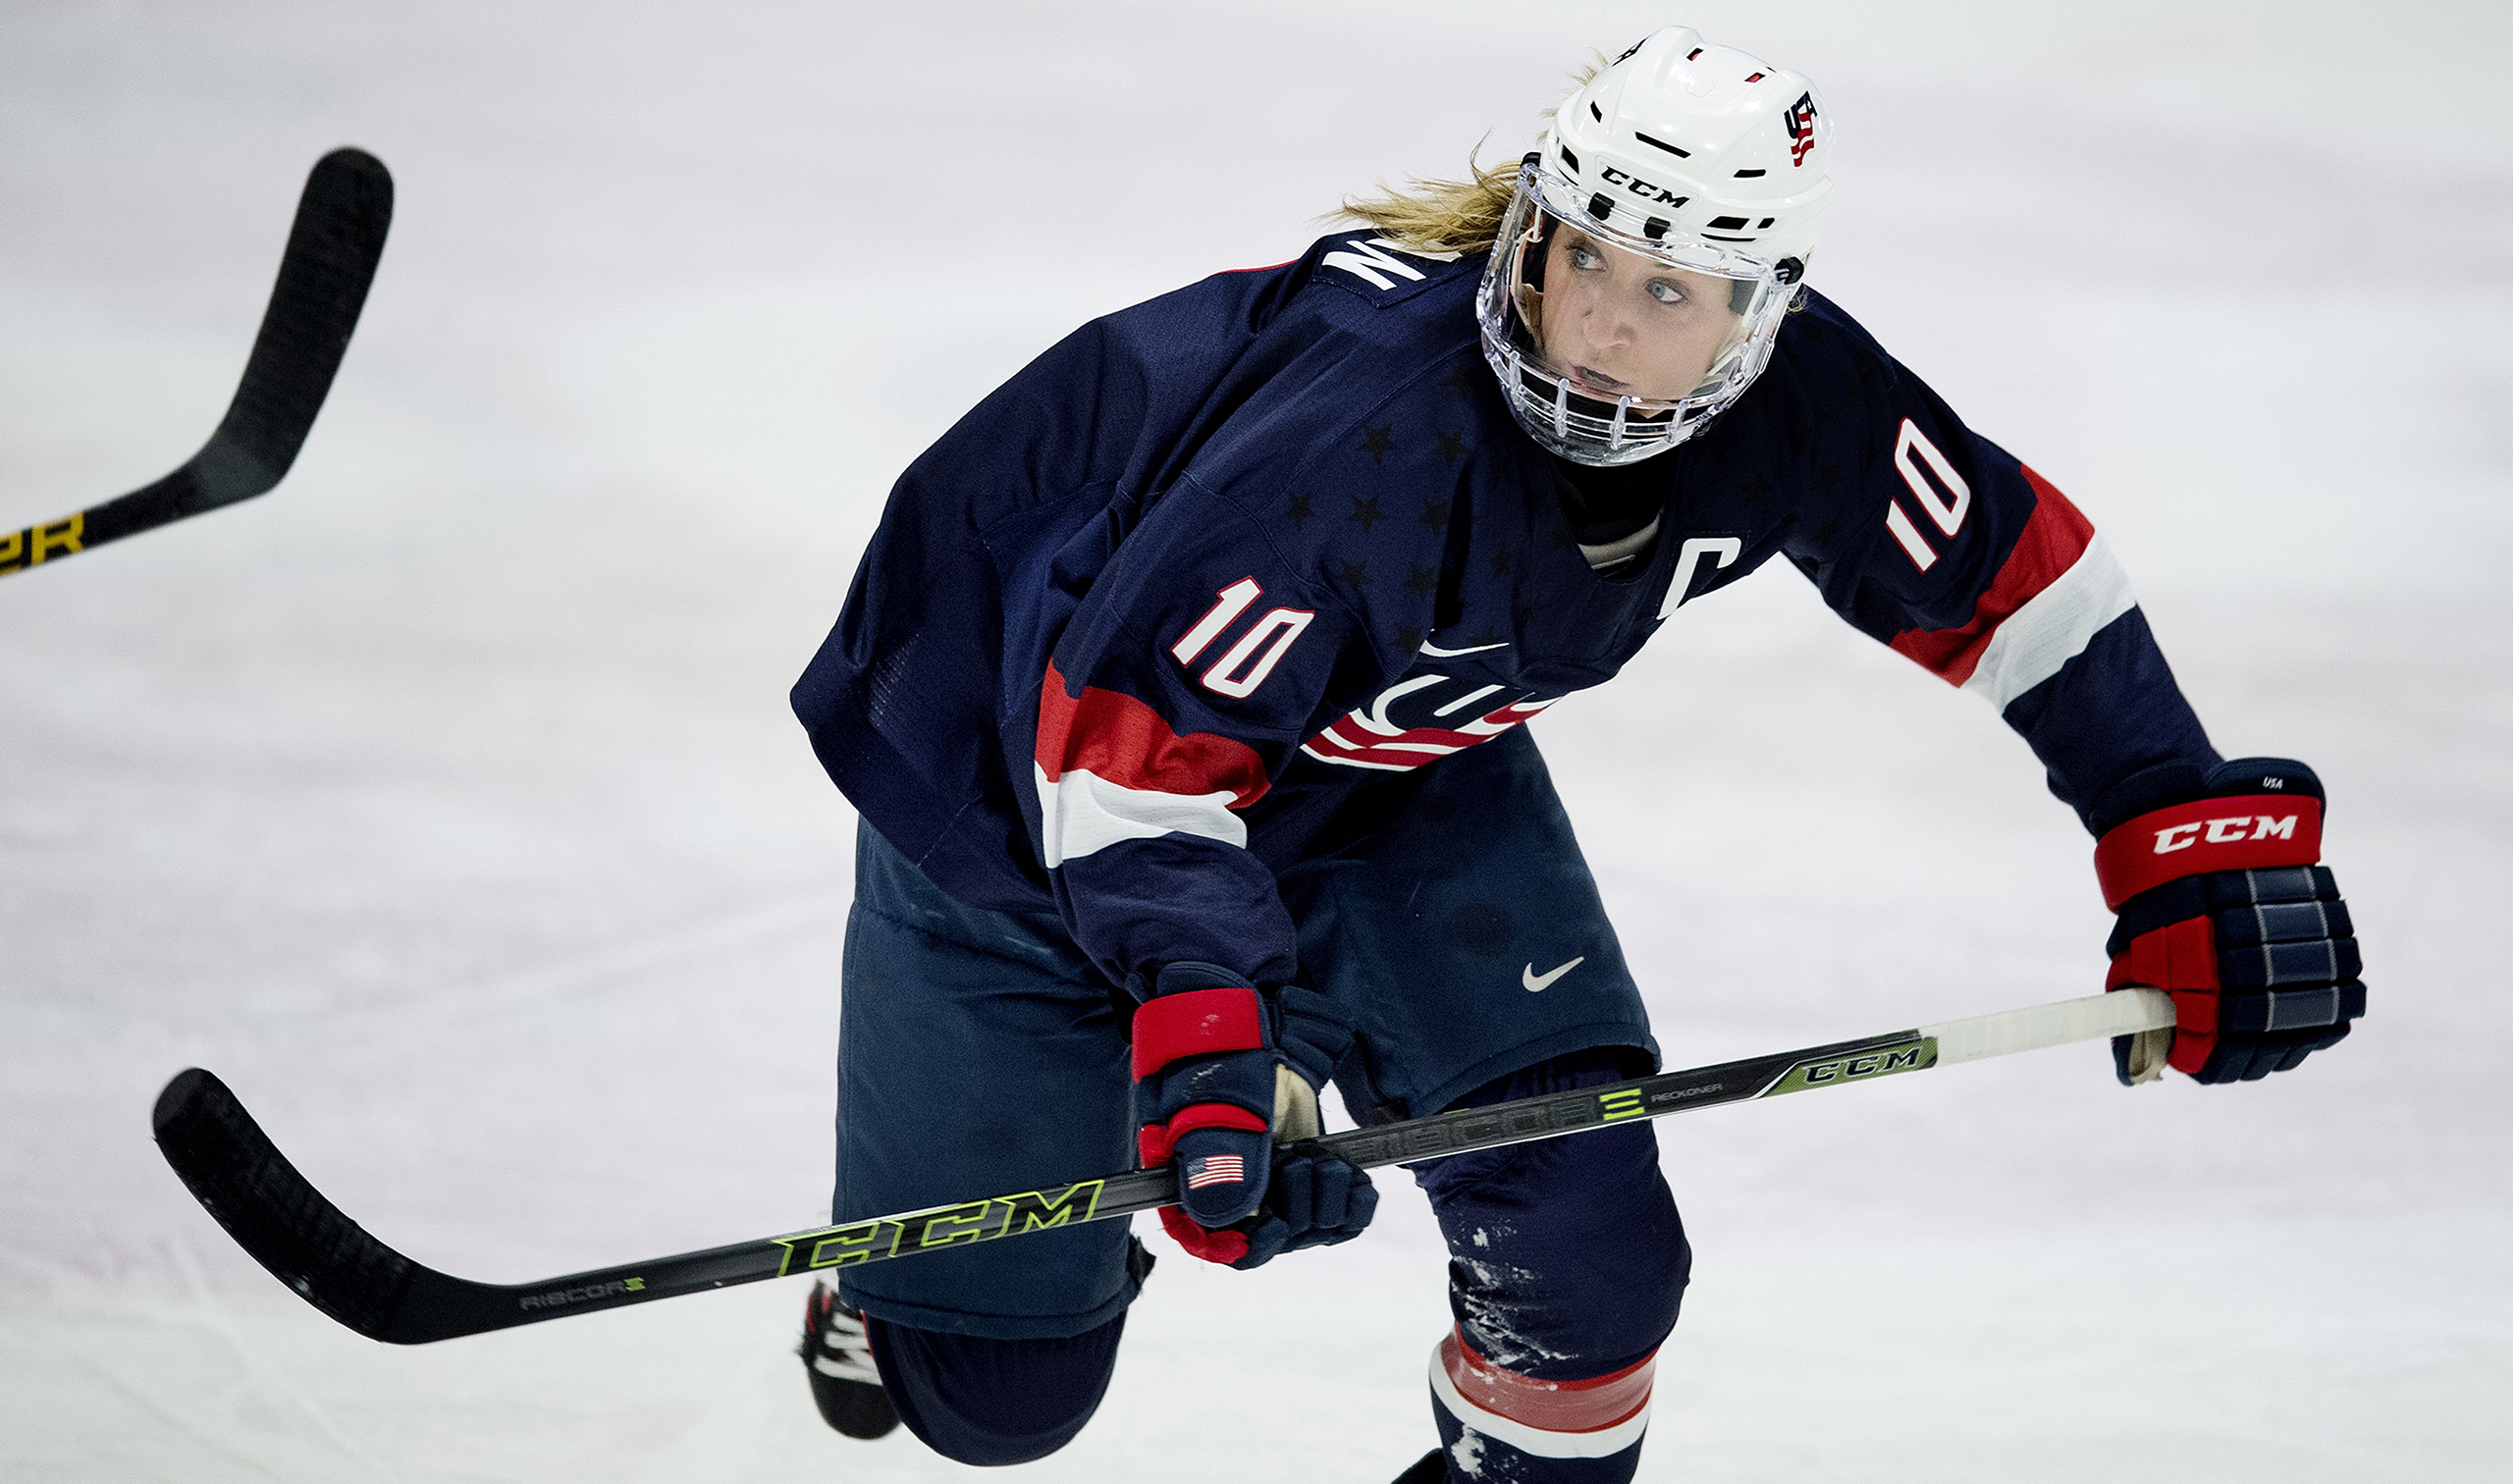 Olympian Duggan is among the U.S. women’s hockey players leading a charge for fairer treatment. (Nils Jakobsson—Zuma Press)